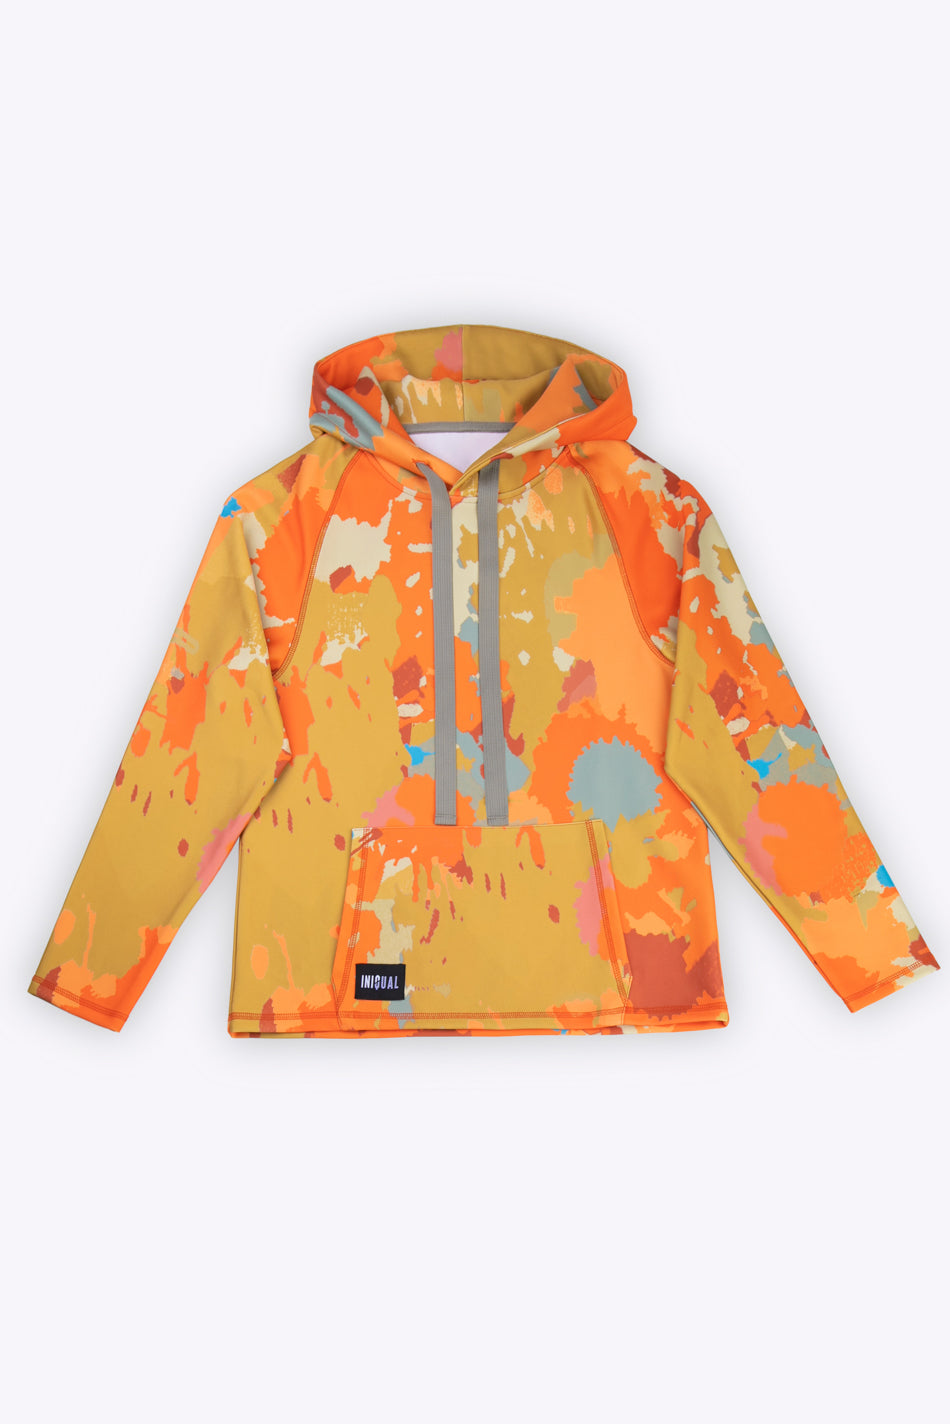 Unisex orange camouflage hoodie